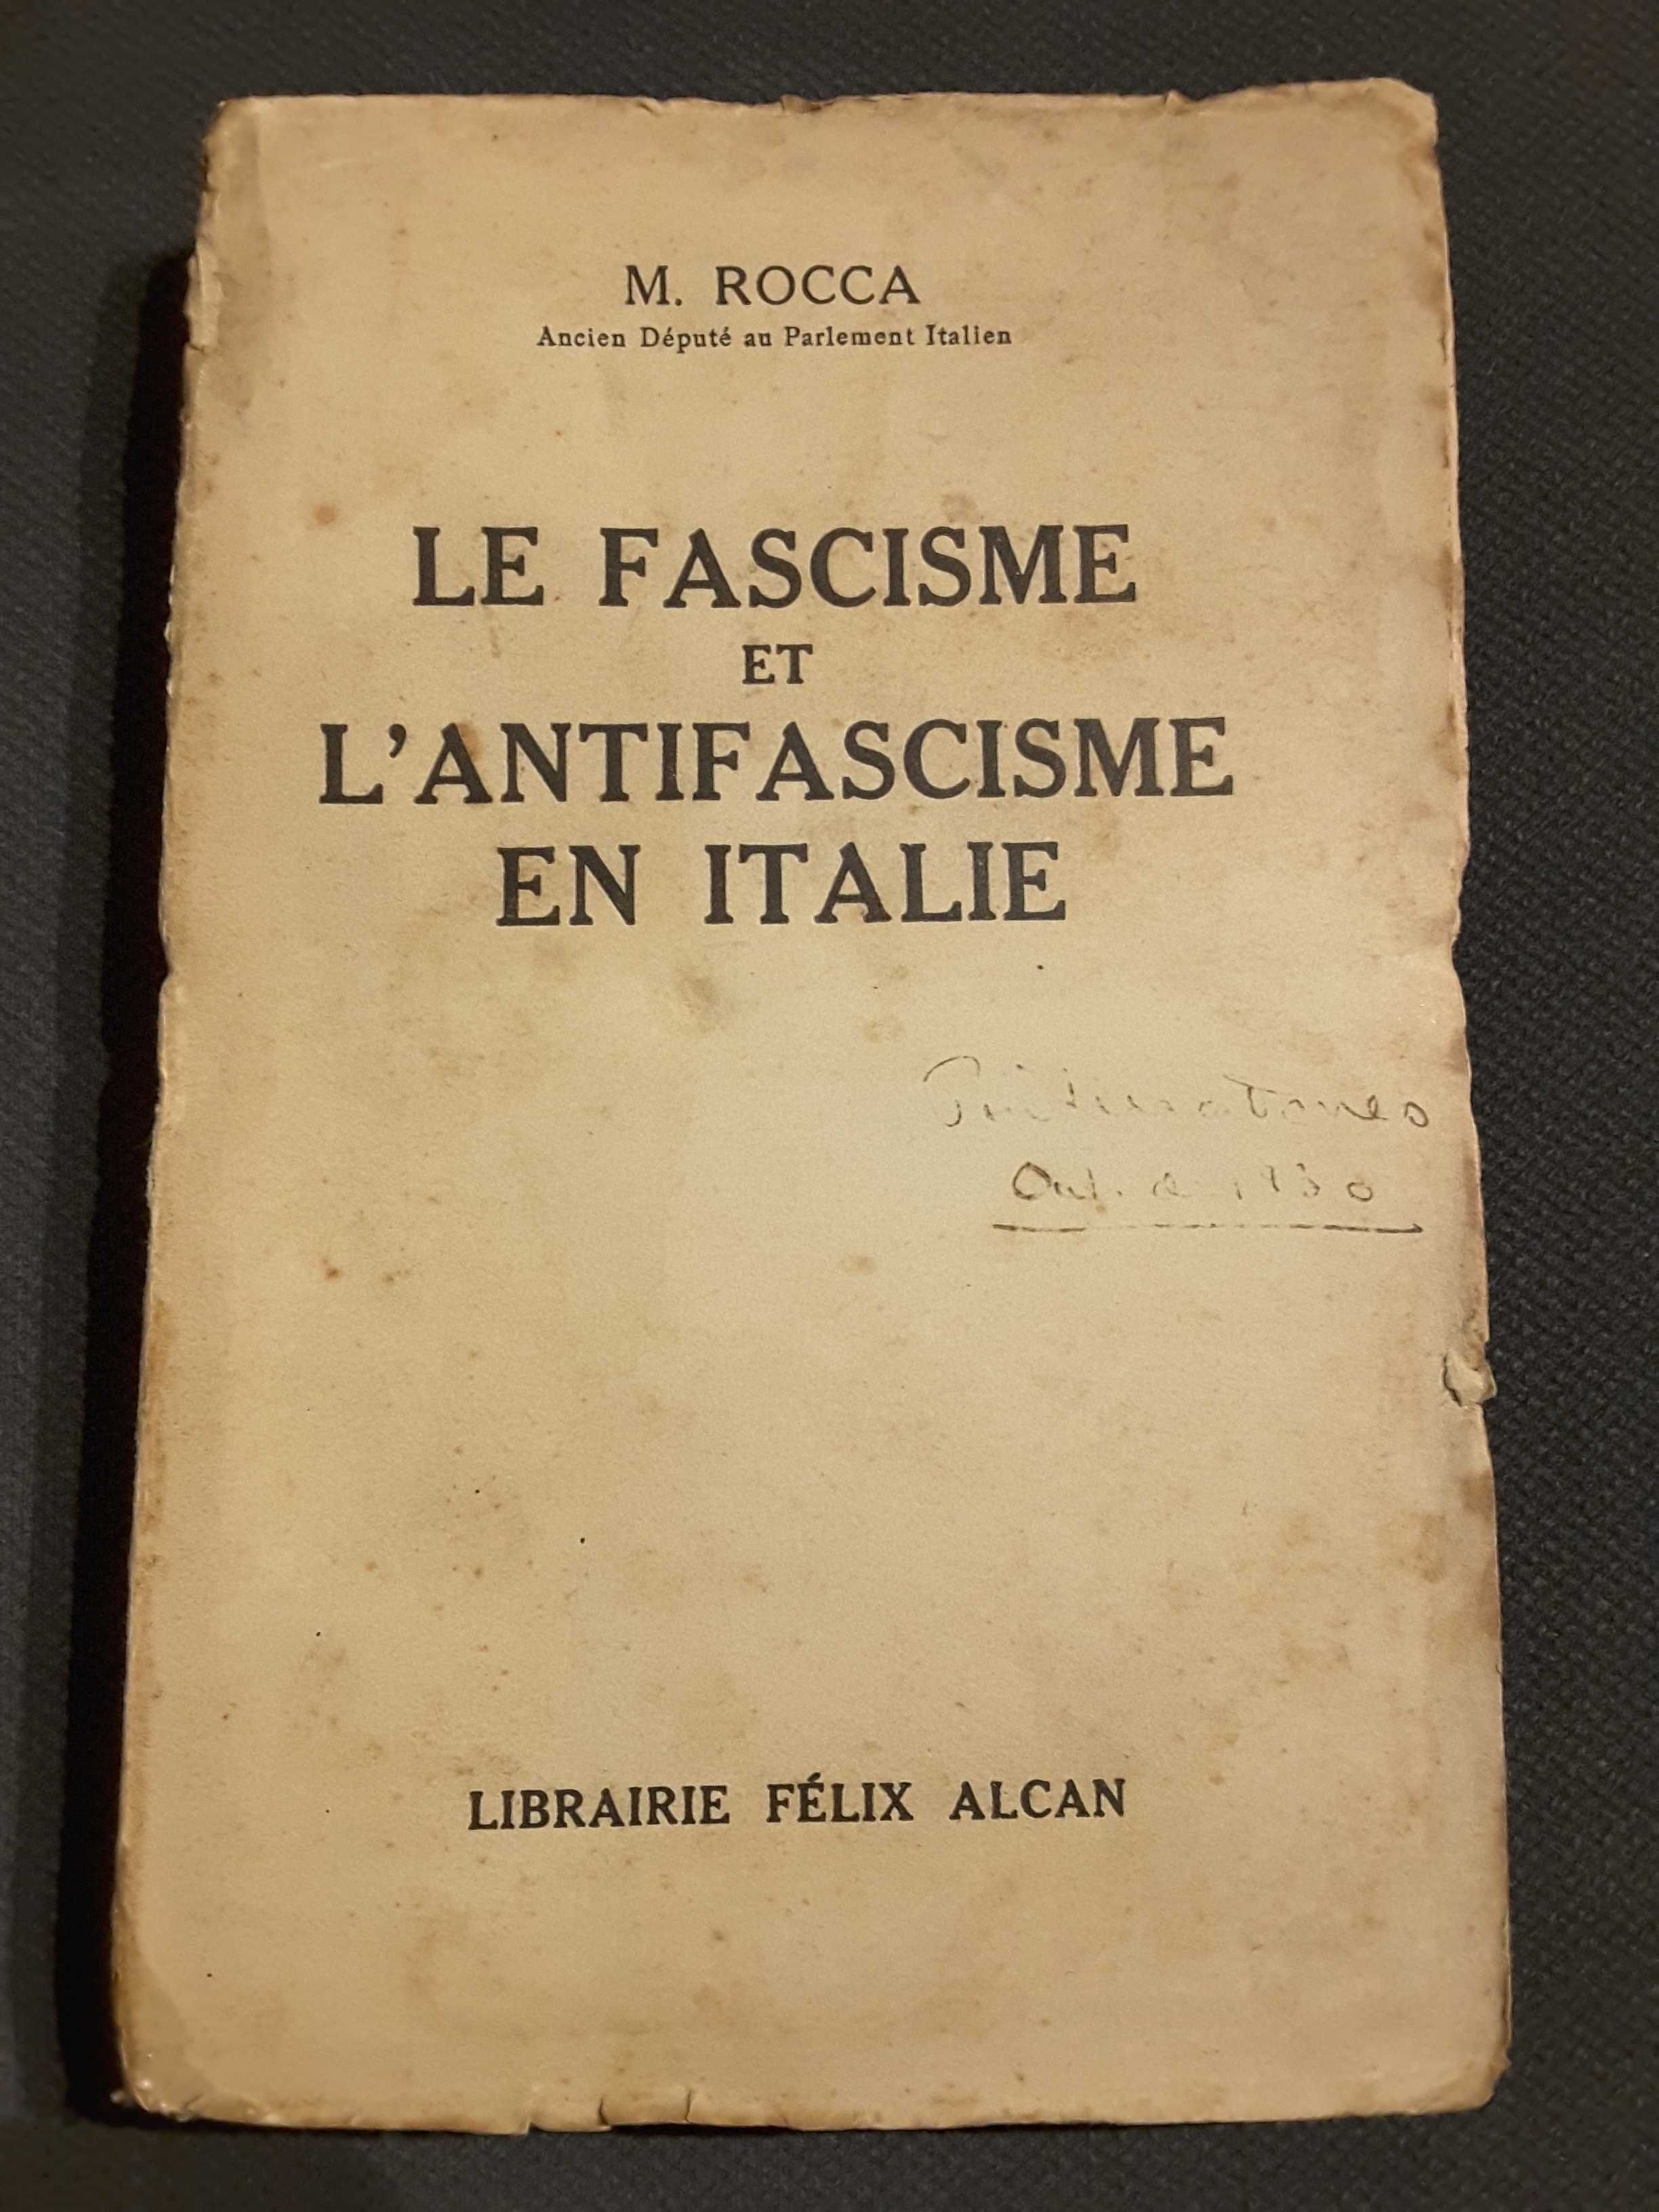 Explicar o Fascismo /Propaganda do III Reich/ Le Fascisme (1930)